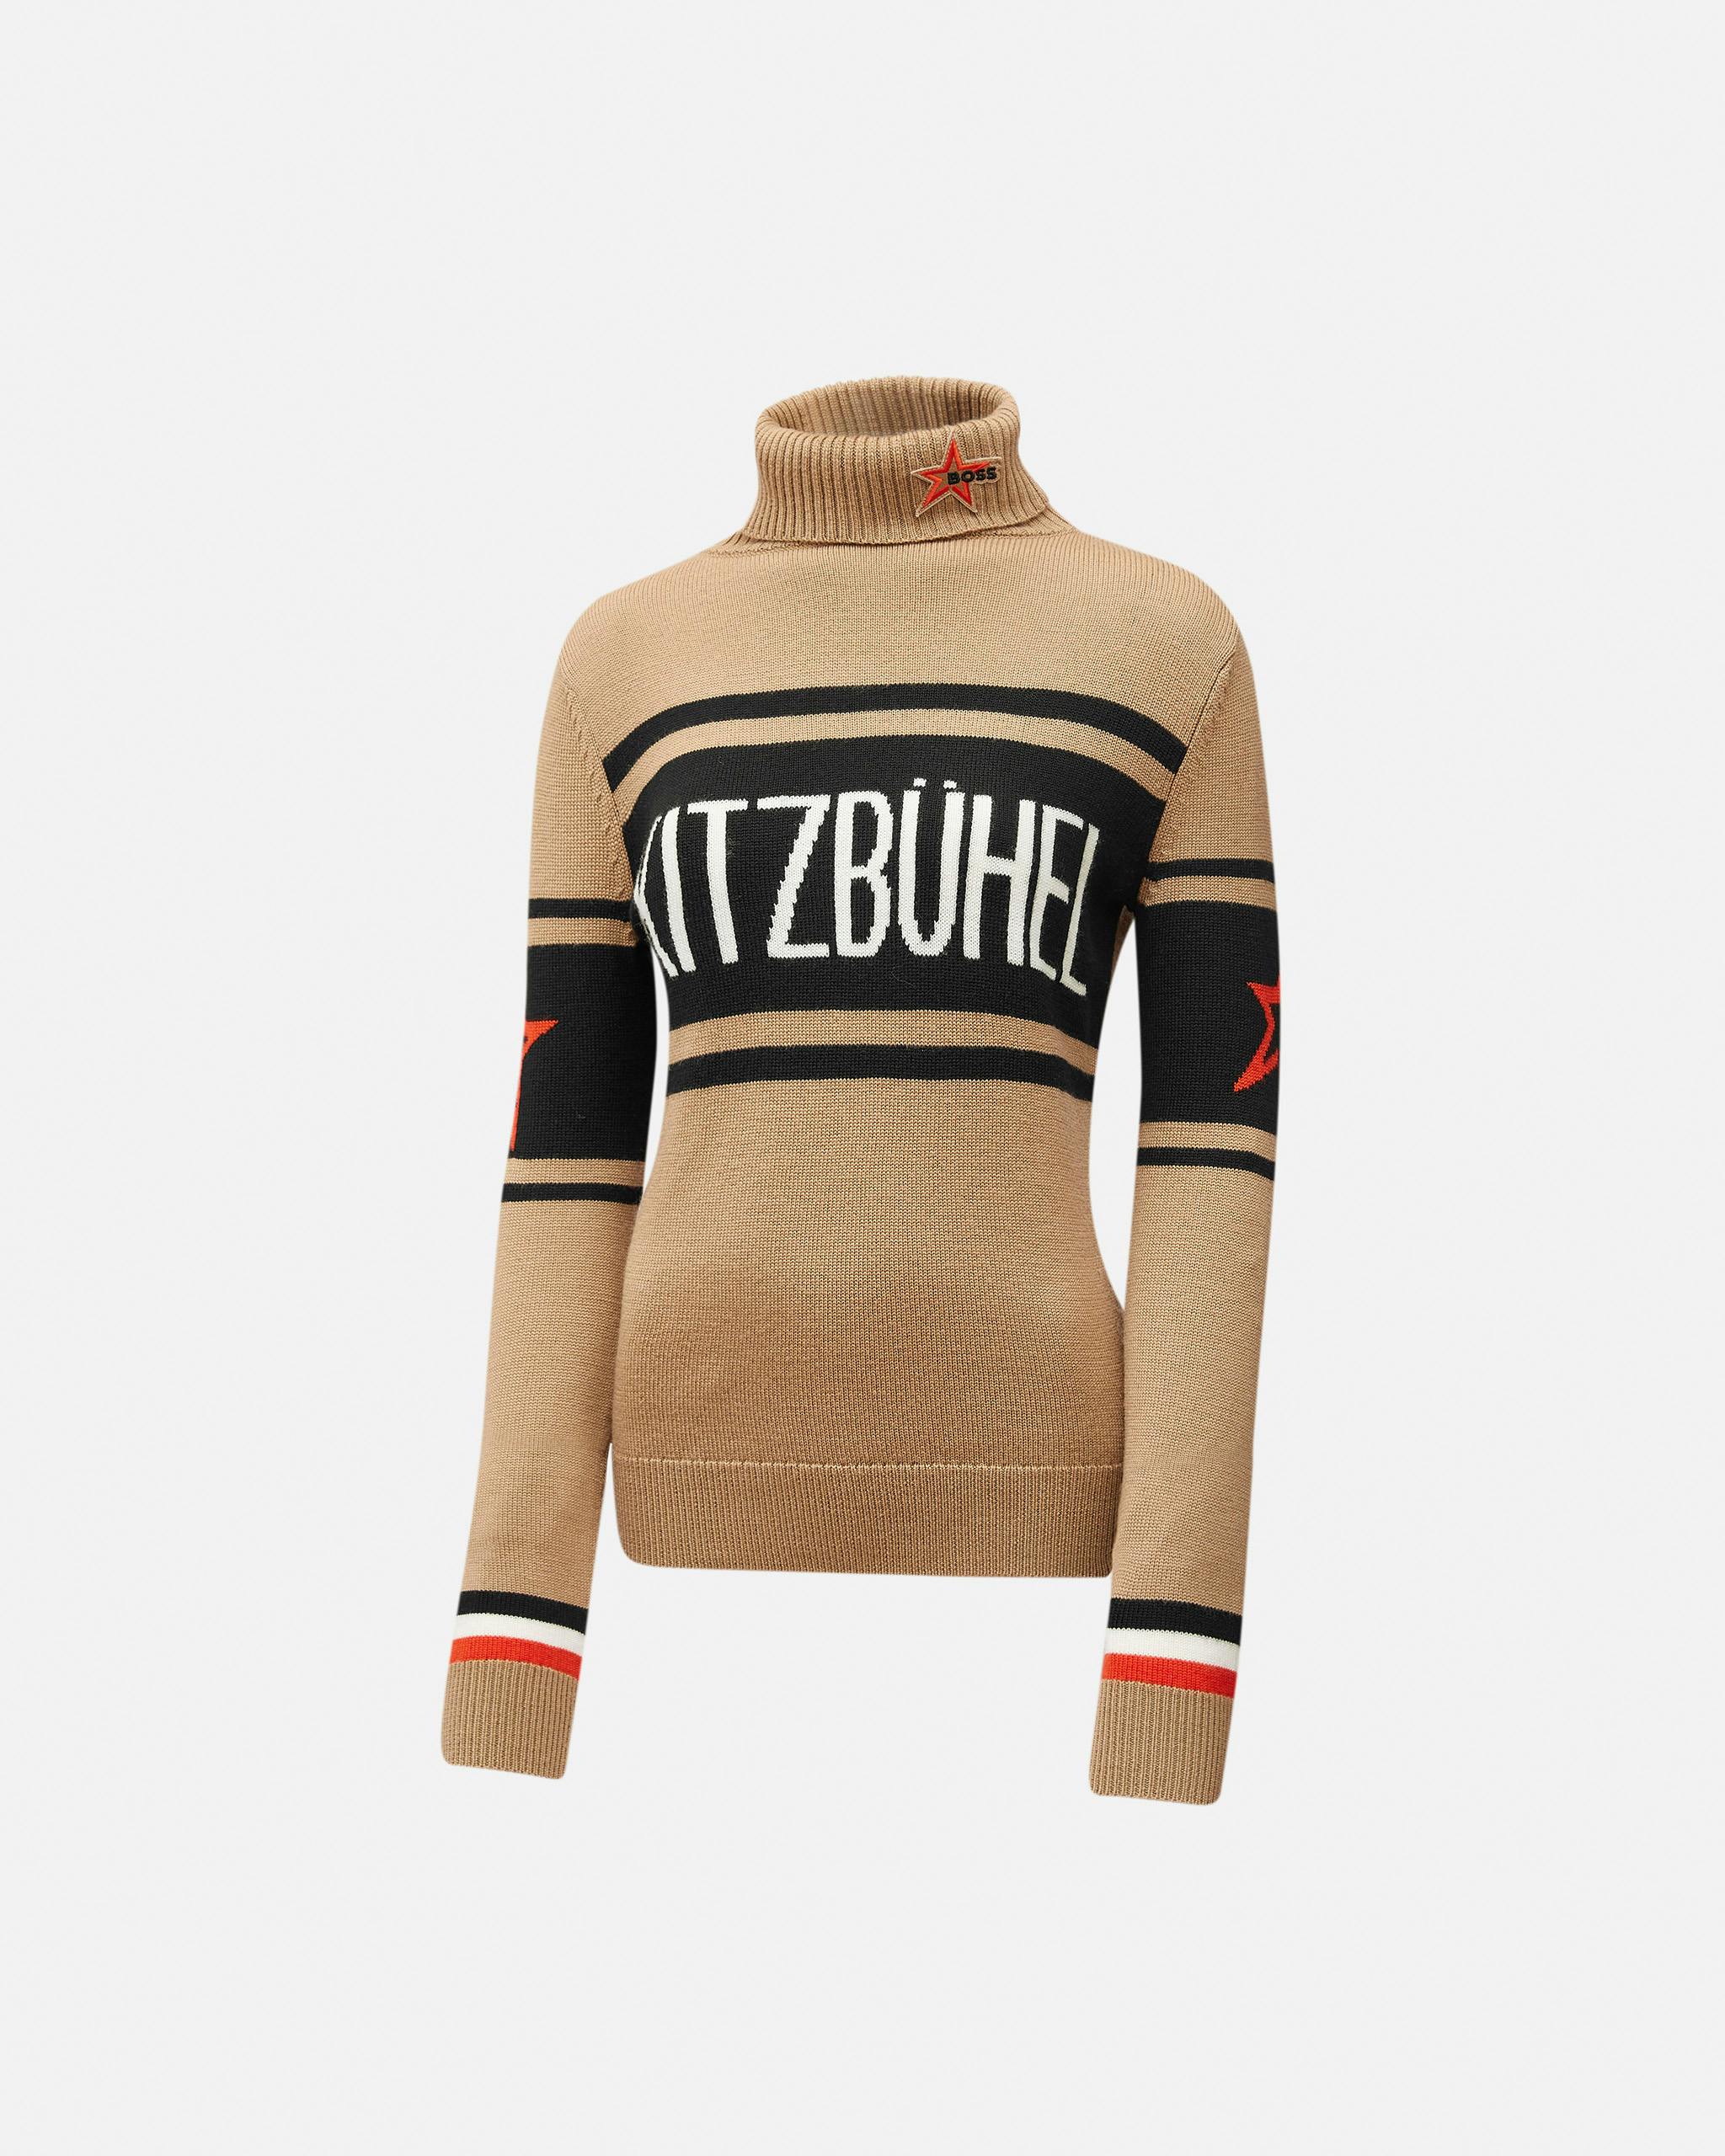 PM x Boss Kitzbuhel Merino Wool Sweater 0